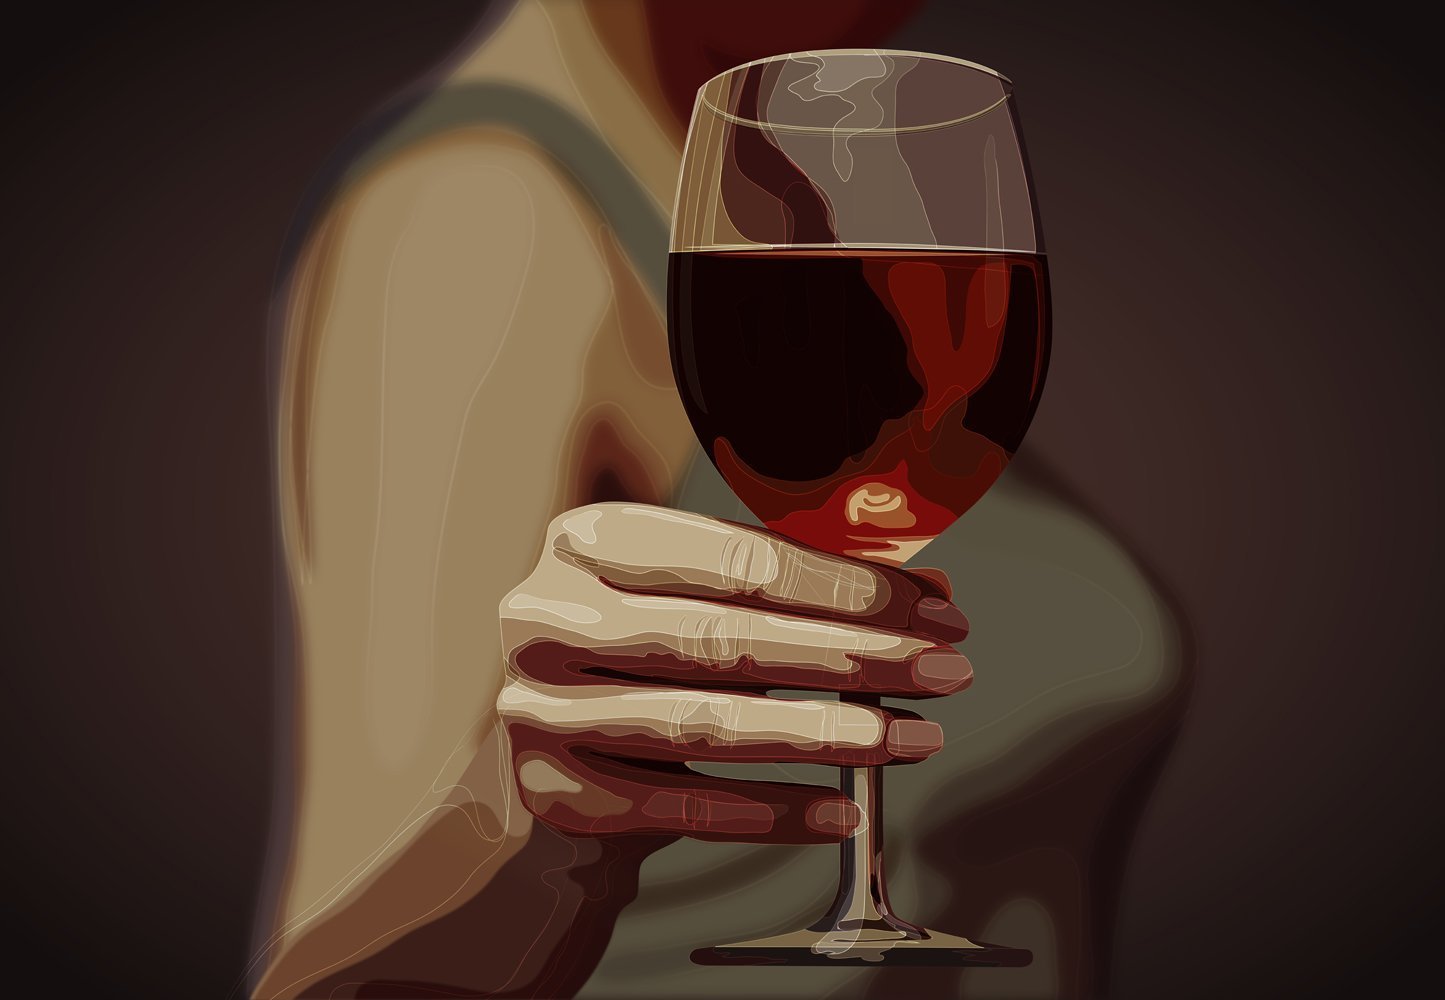 Алакаев бокал вина. Бокал с вином. Бокал вина арт. Живопись вином. Девушка с бокалом арт.